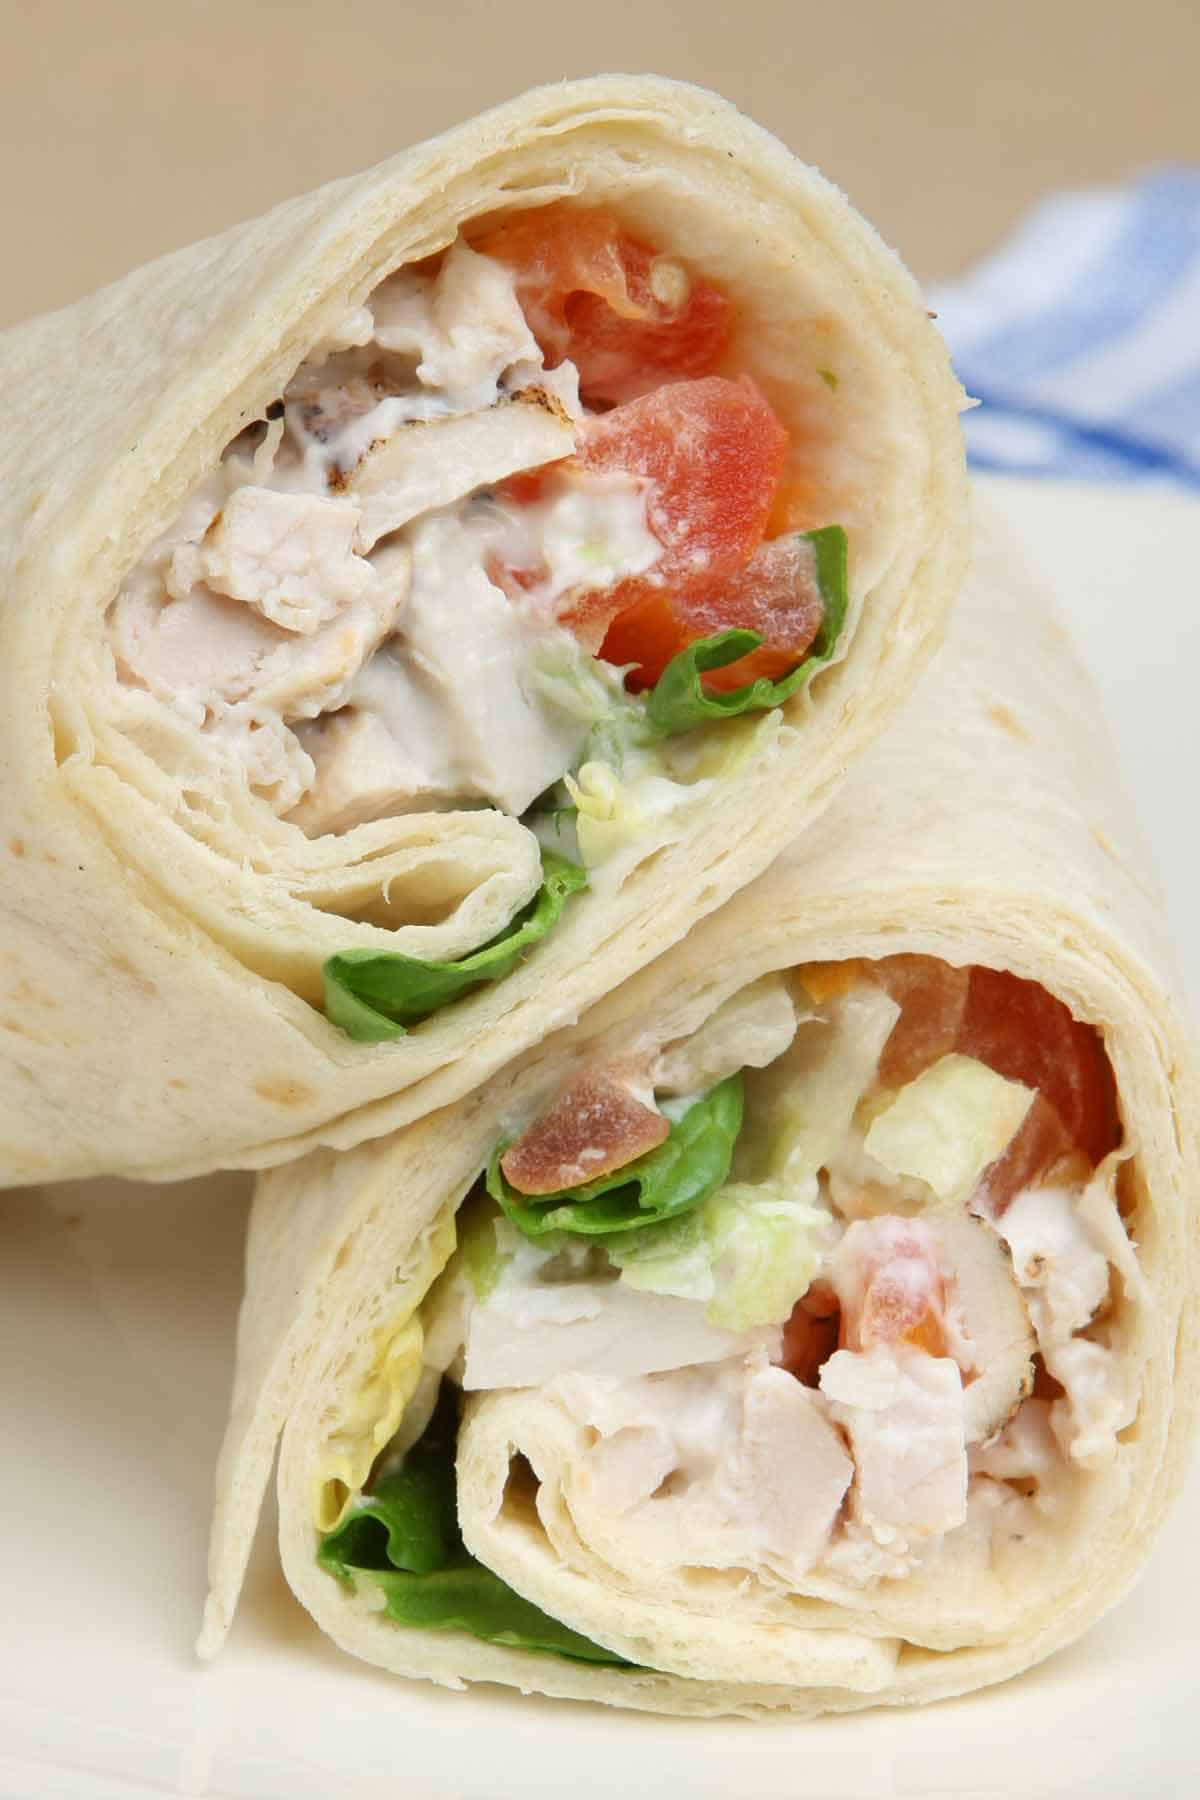 Chicken salad in a tortilla wrap instead of bread.